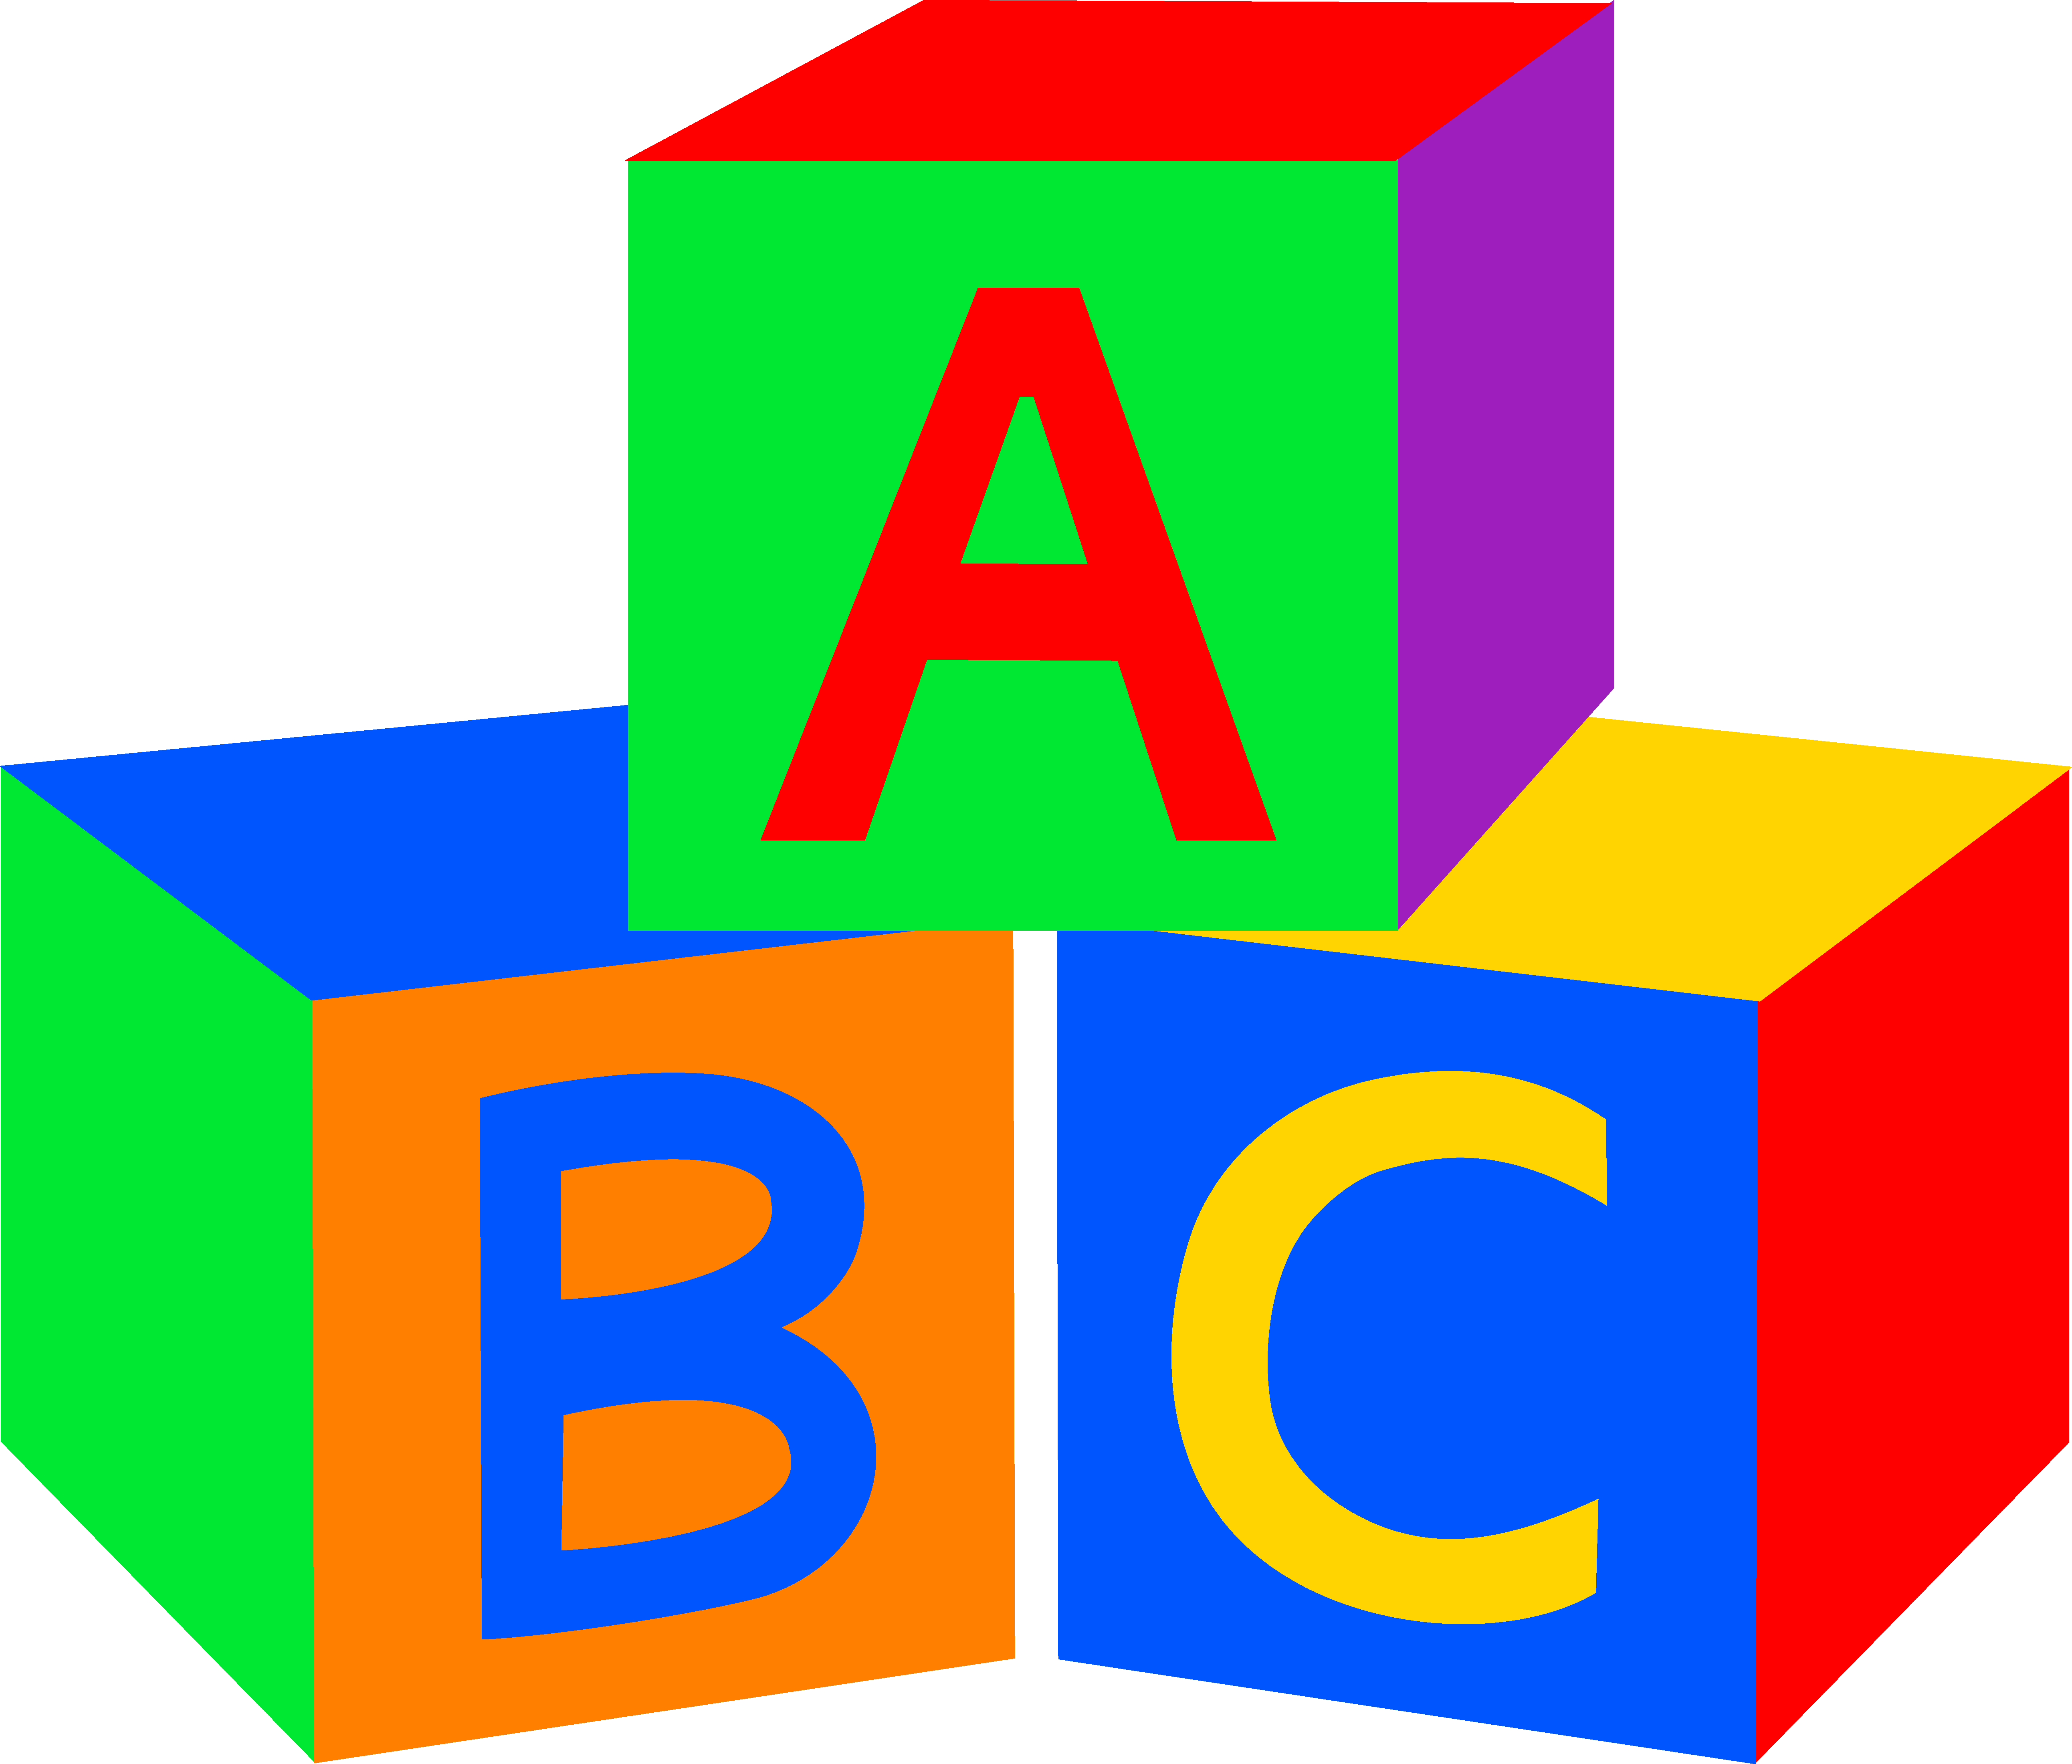 Alphabet Blocks Clipart